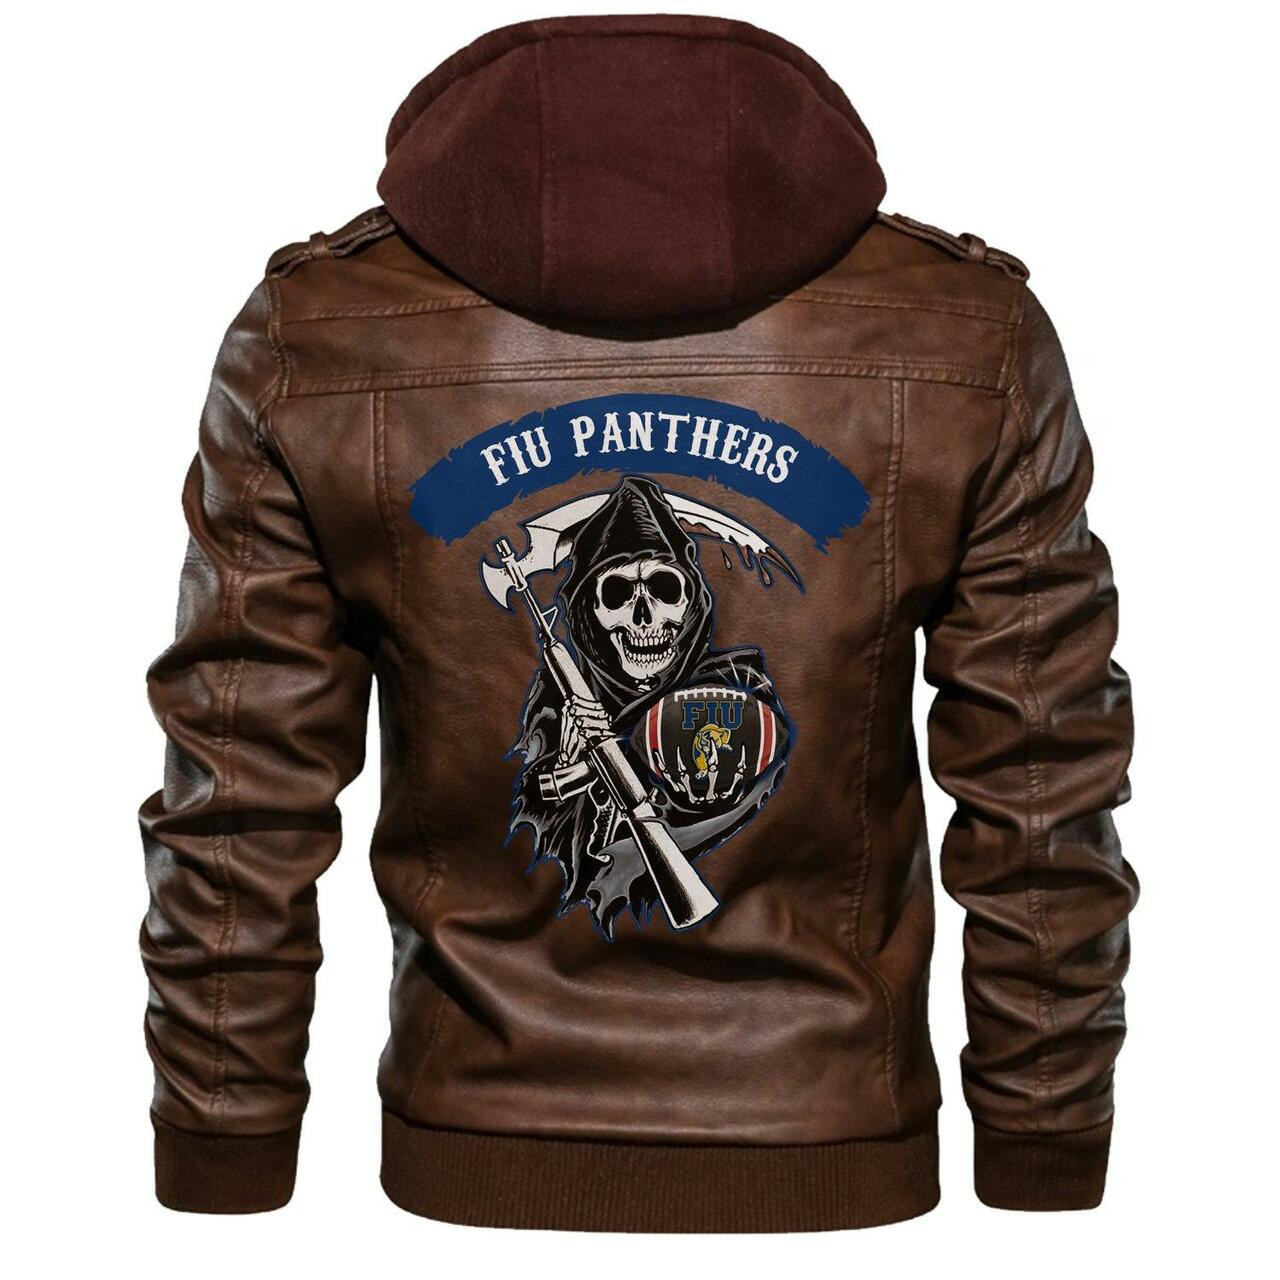 Top leather jacket Sells Best on Techcomshop 29